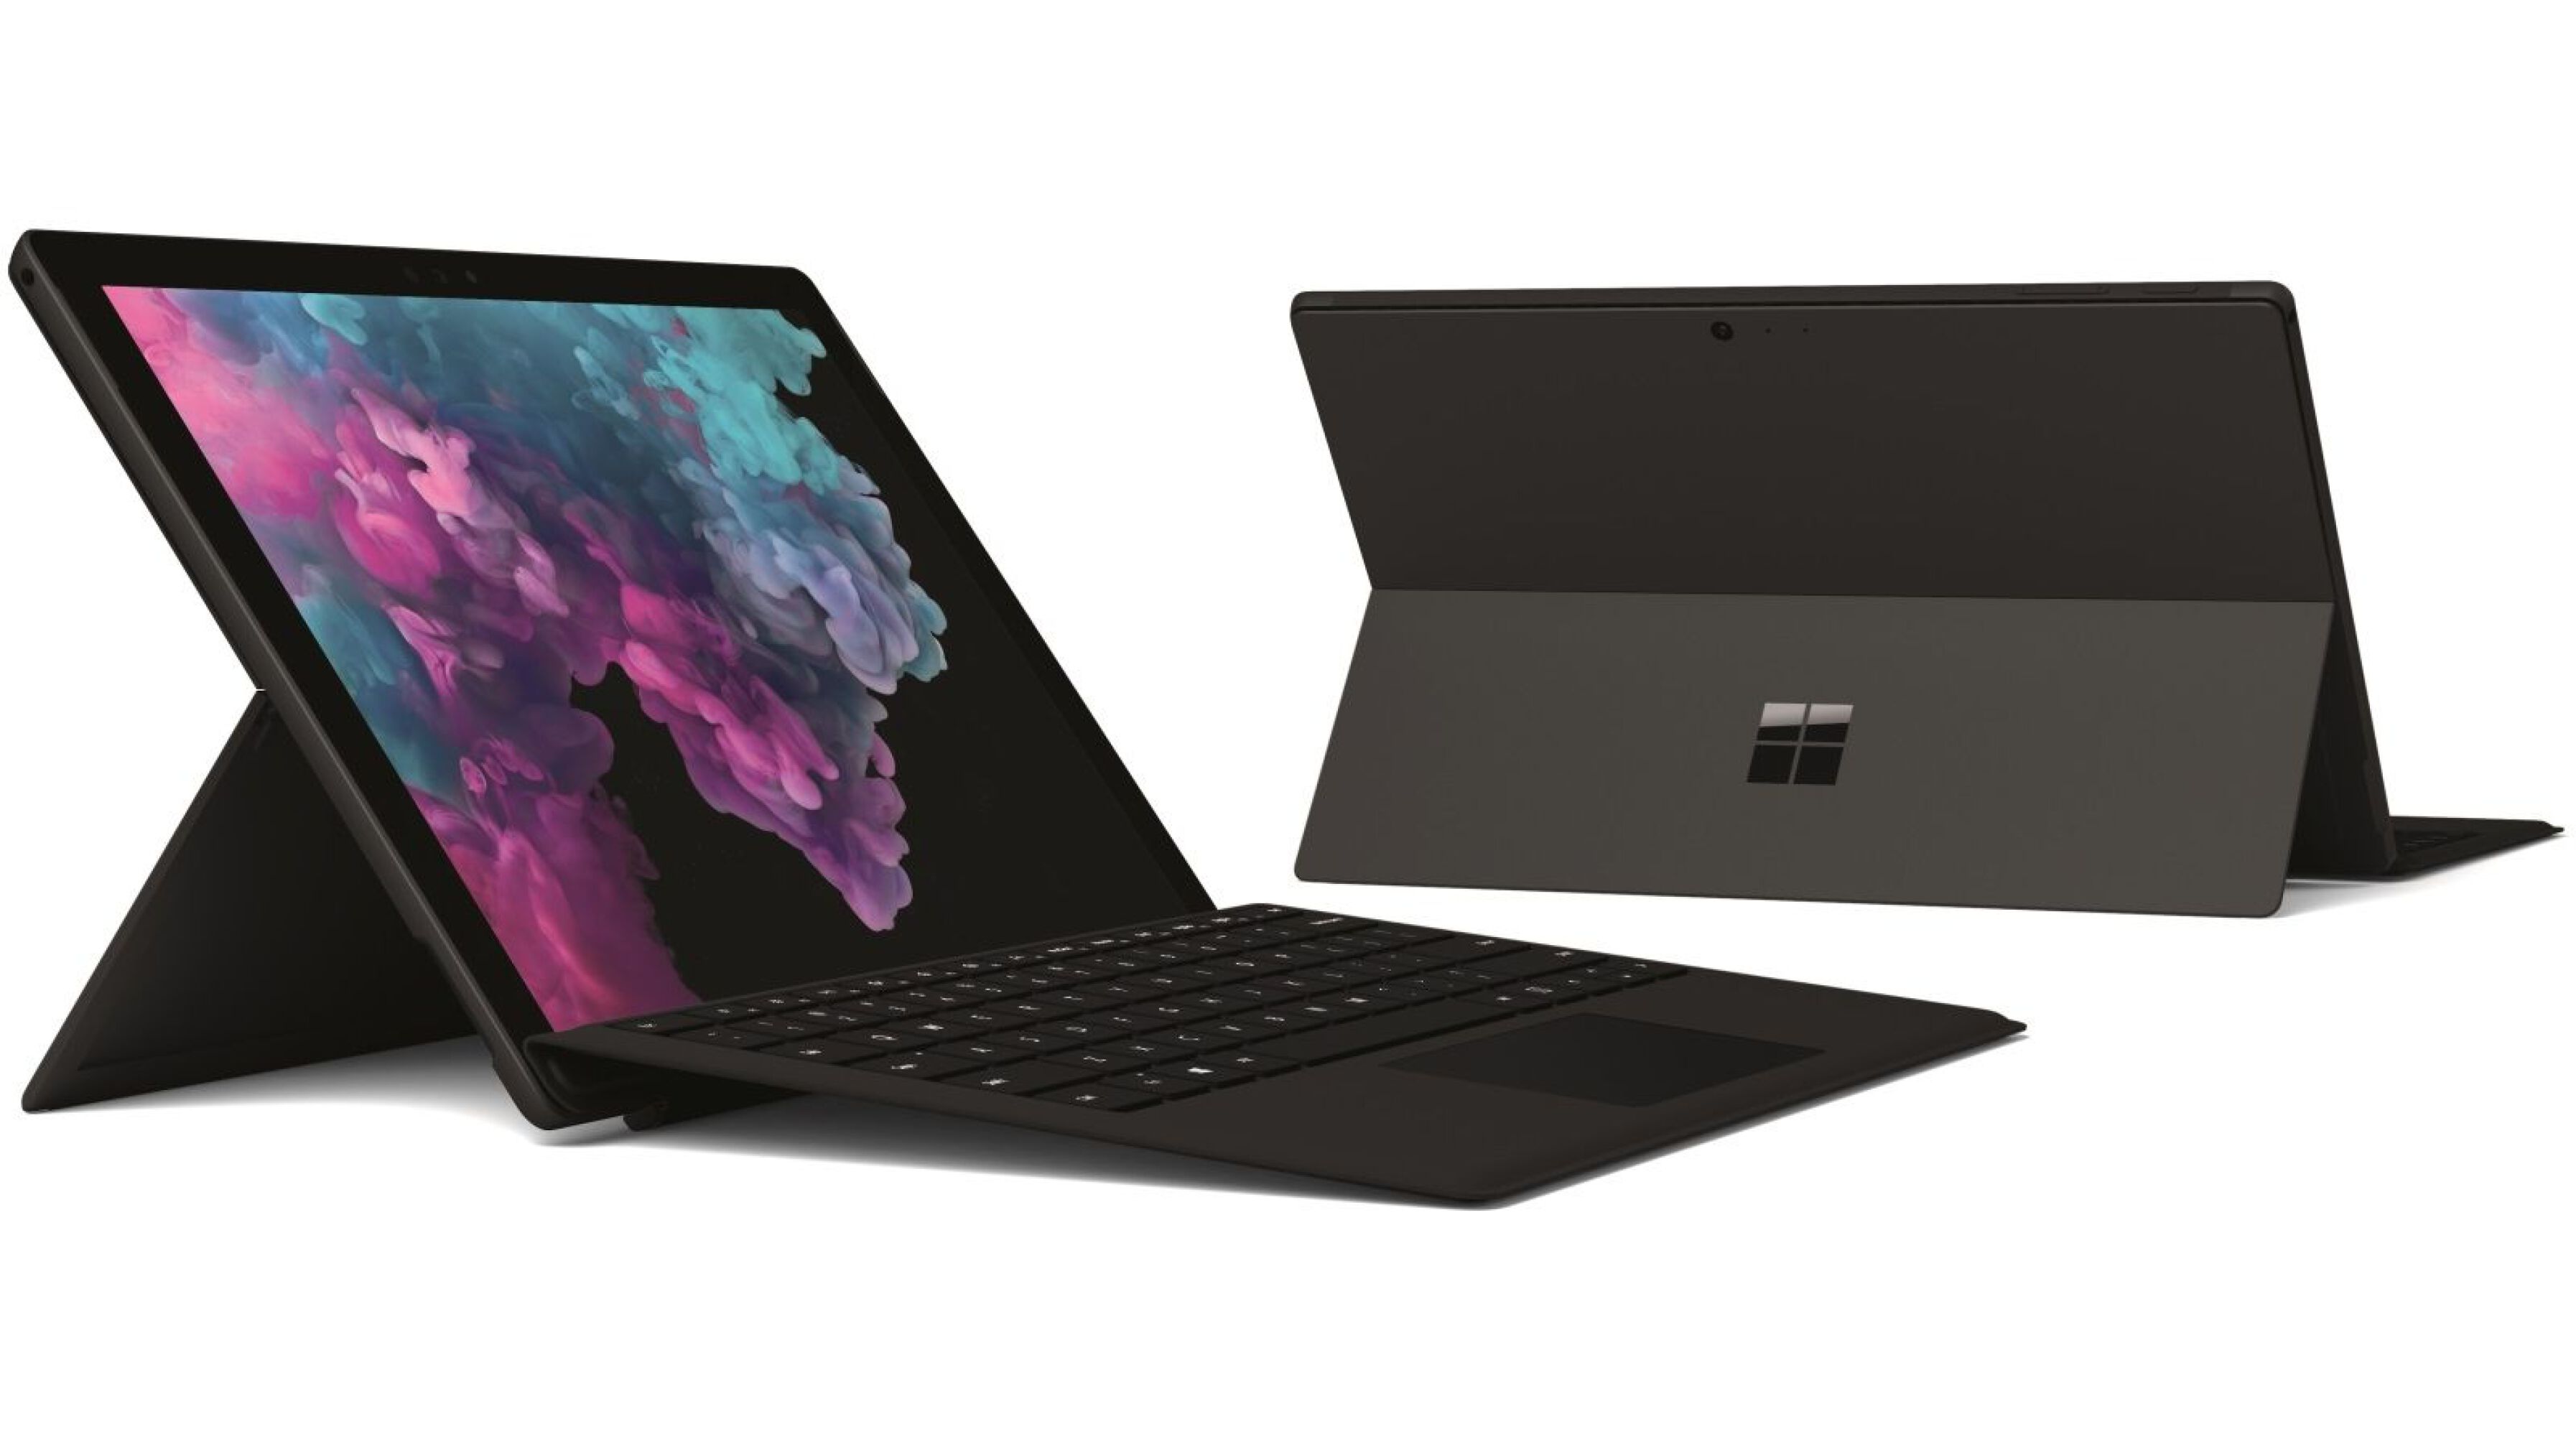  قیمت تبلت Microsoft Surface Pro 6 | لاکچری لپ تاپ 